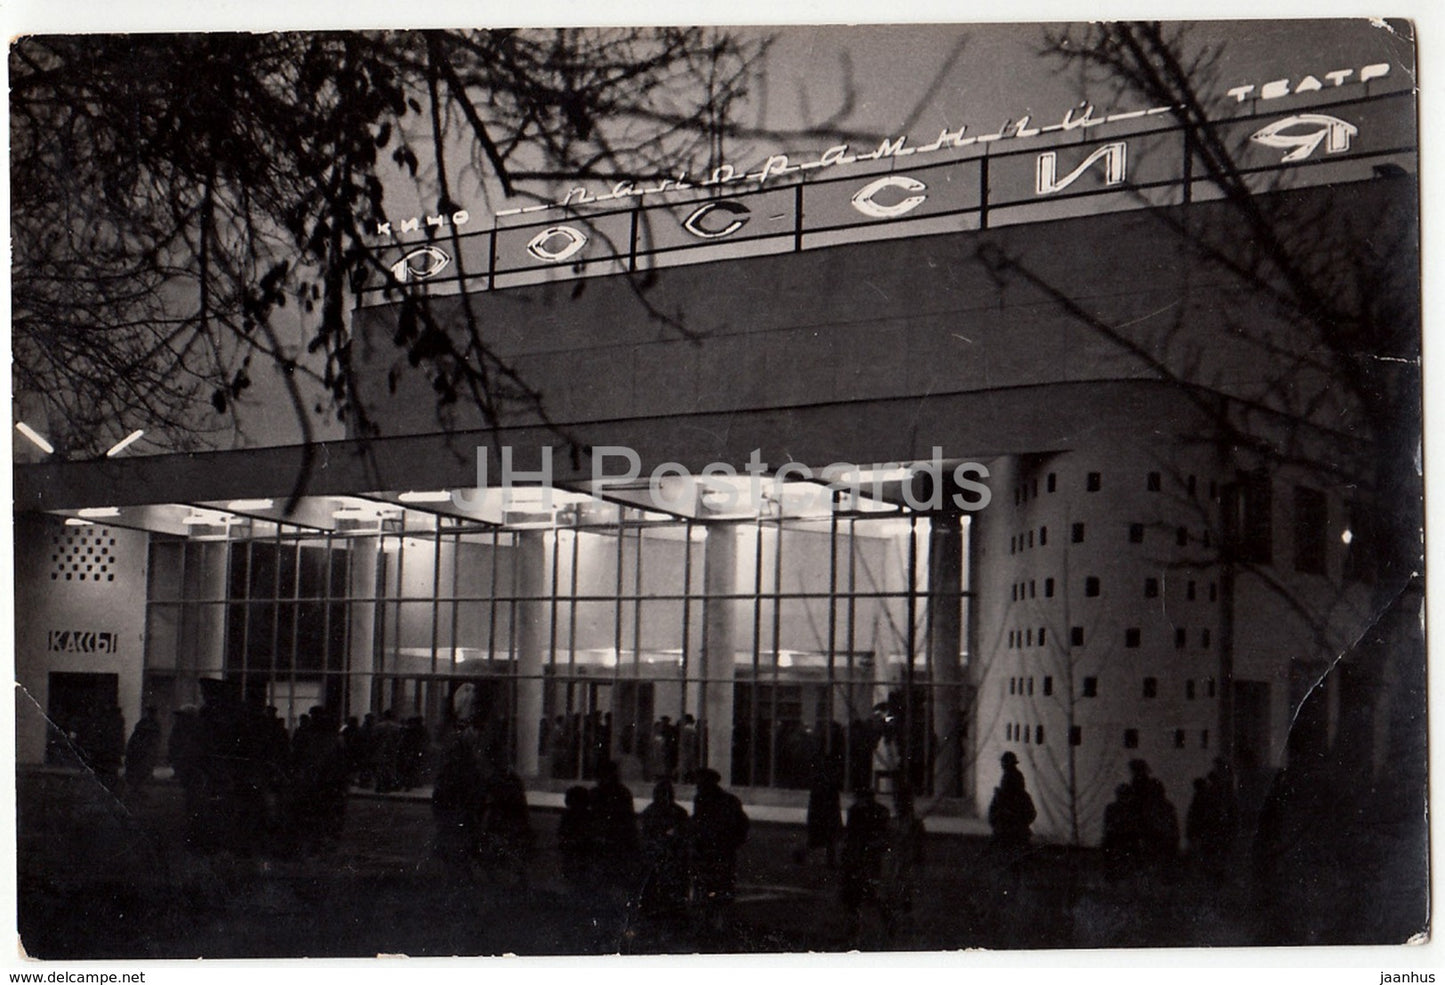 Bishkek - Frunze - Panorama Cinema Theatre Rossiya - photo postcard - Kyrgyzstan USSR - used - JH Postcards